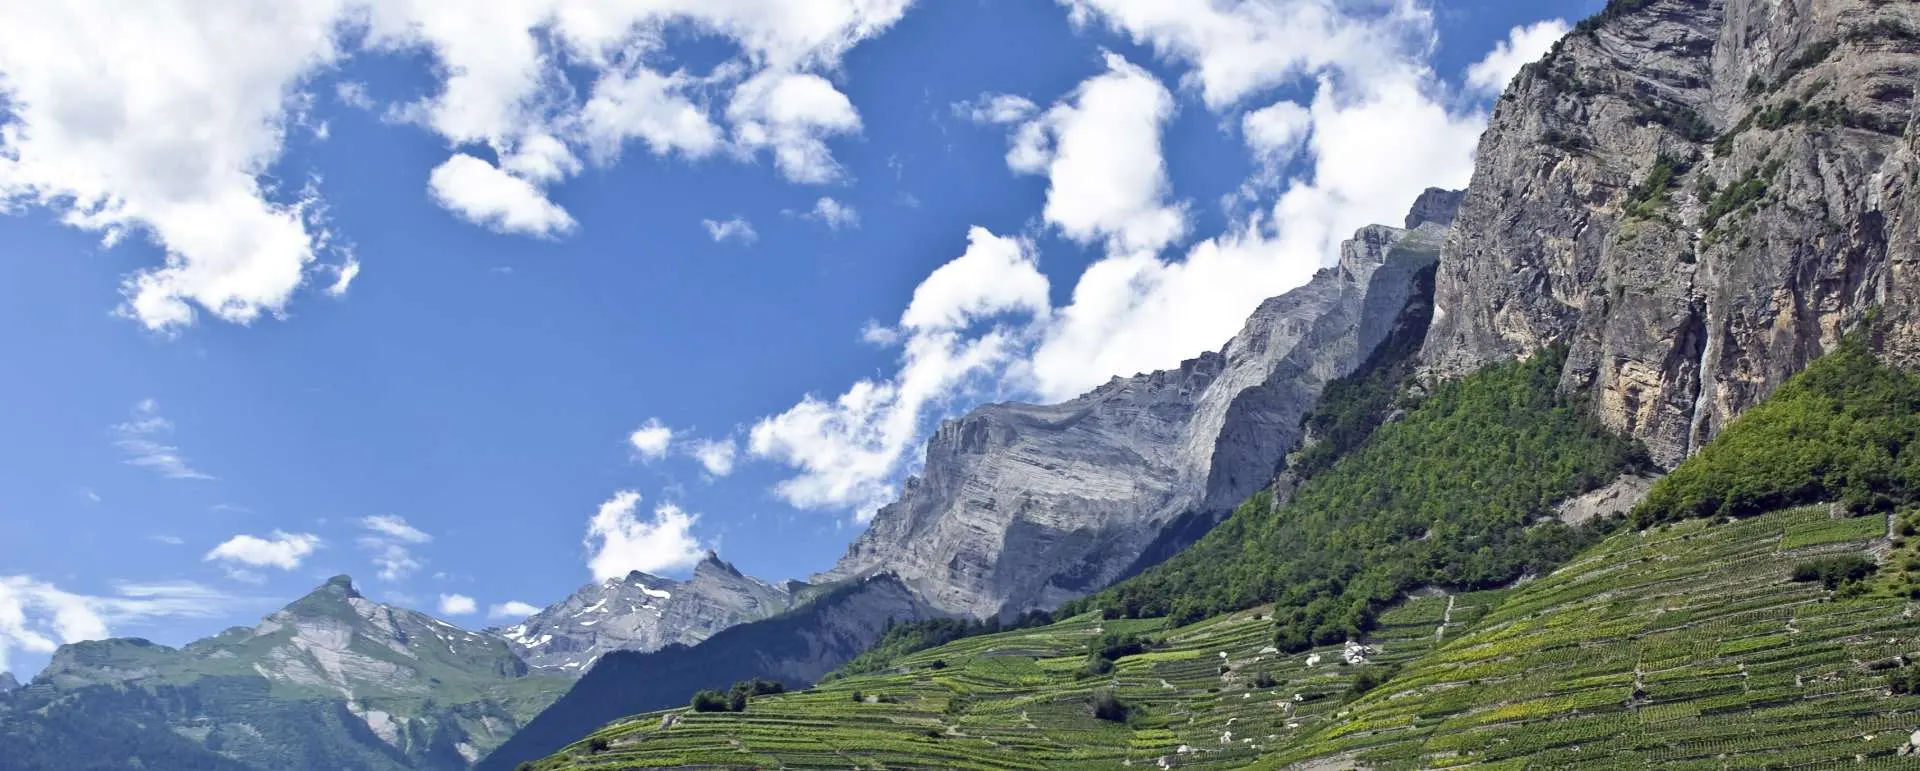 Valais - the destination for group hotel for art workshops